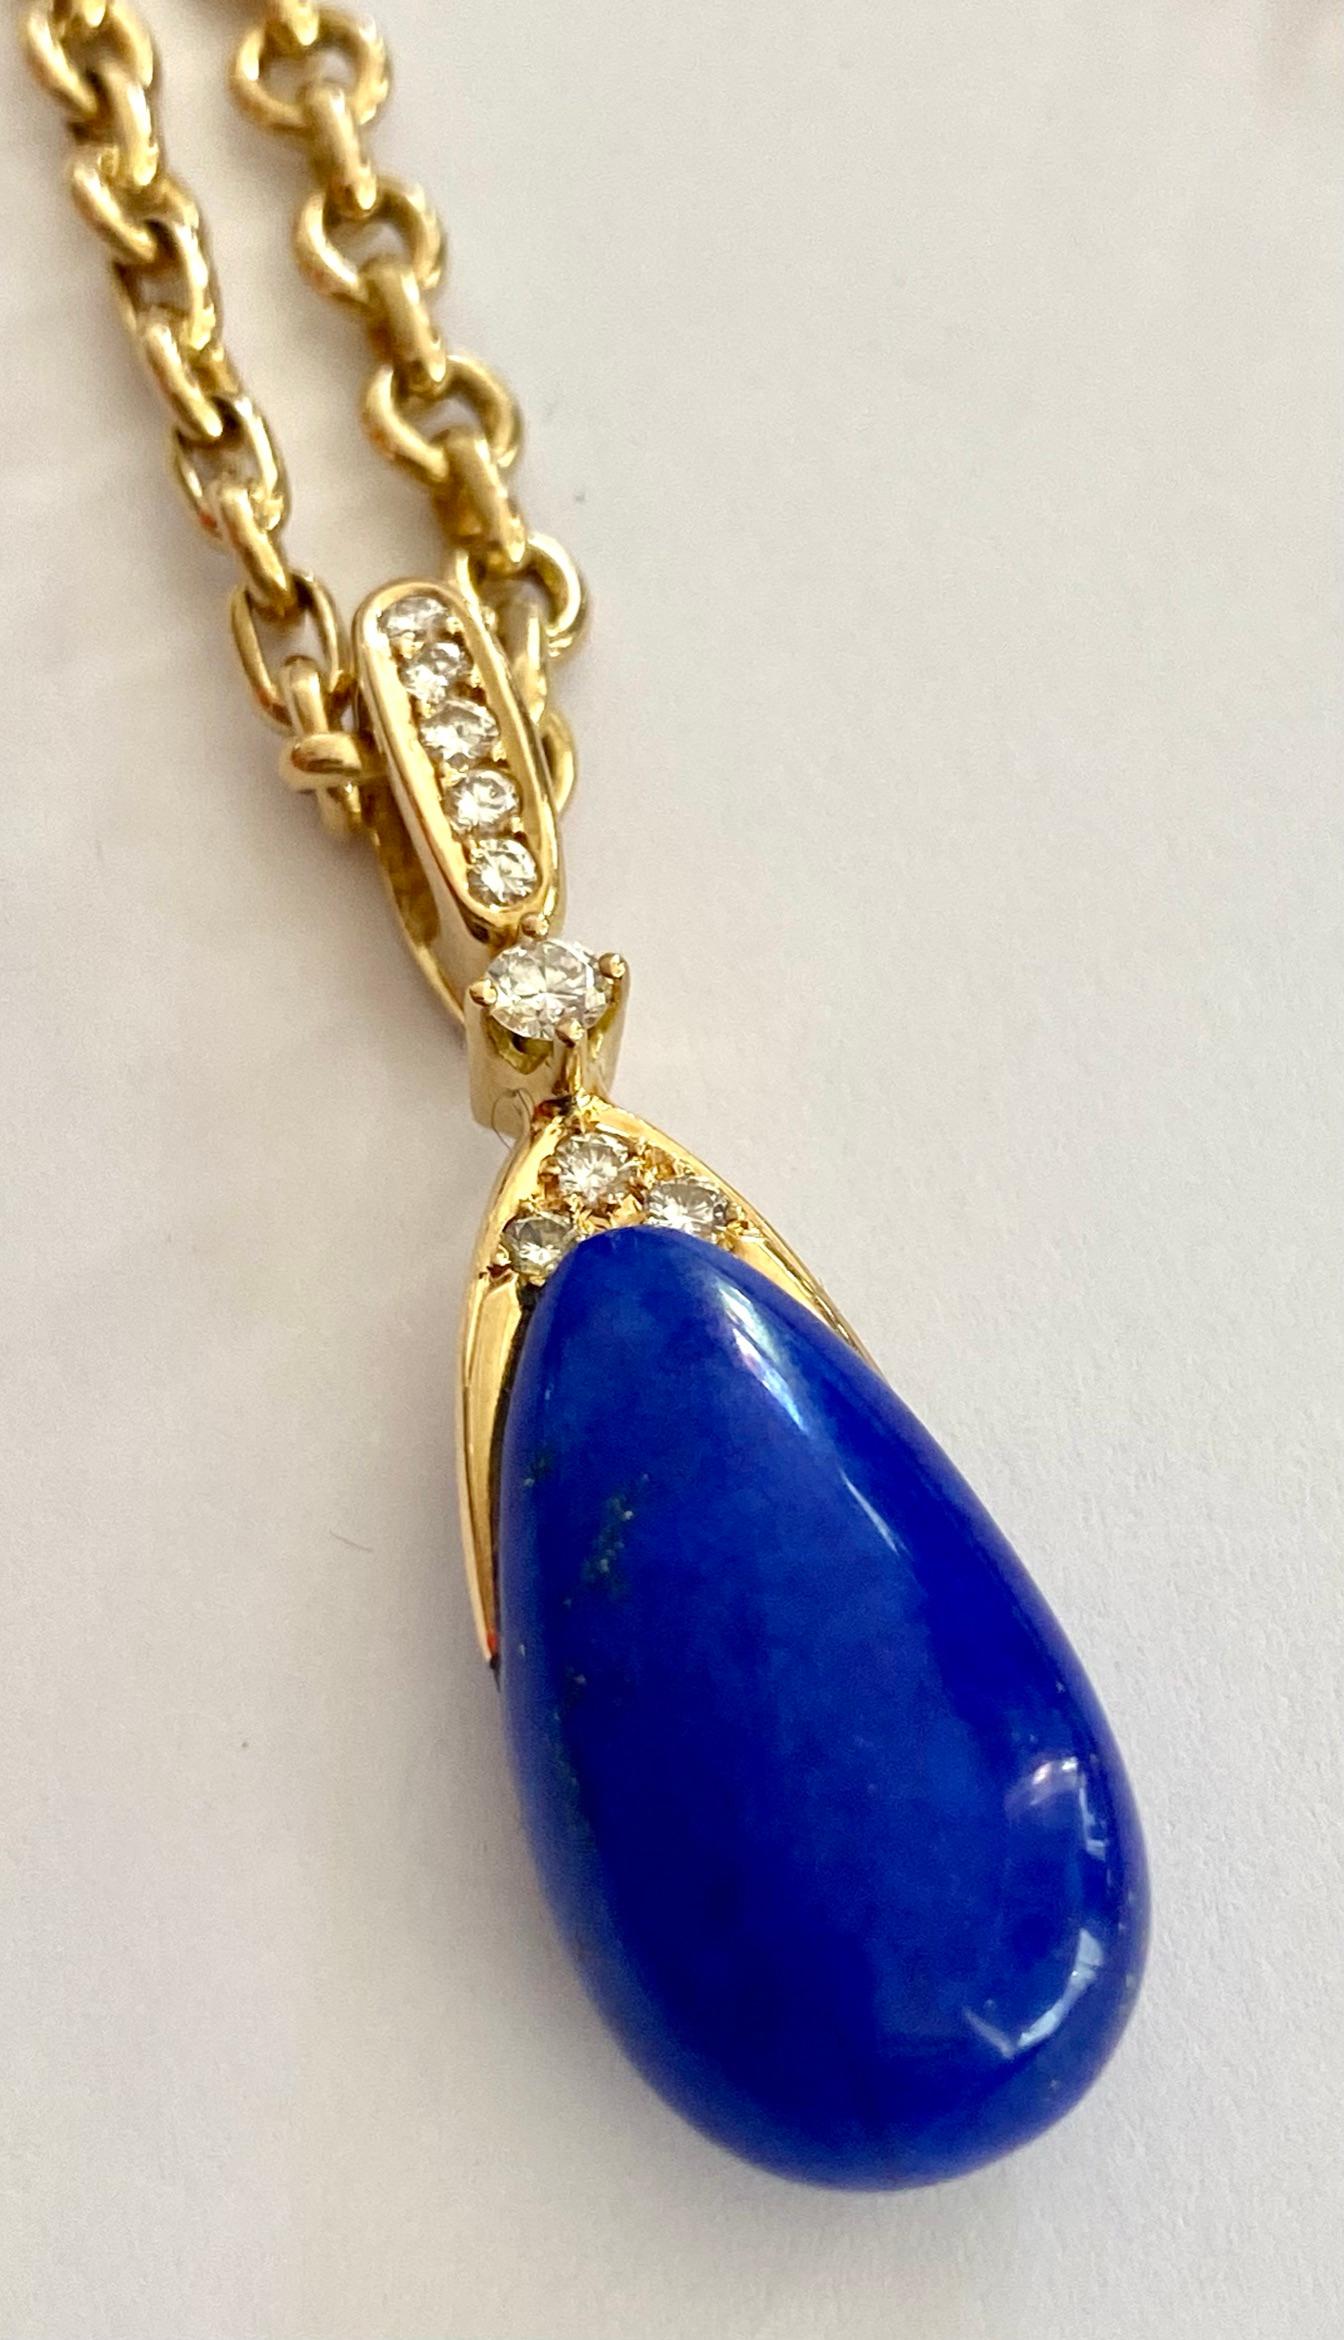 Chaumet Paris, Necklace with Pendant, Lapis Lazuli and 9 Diamonds 2